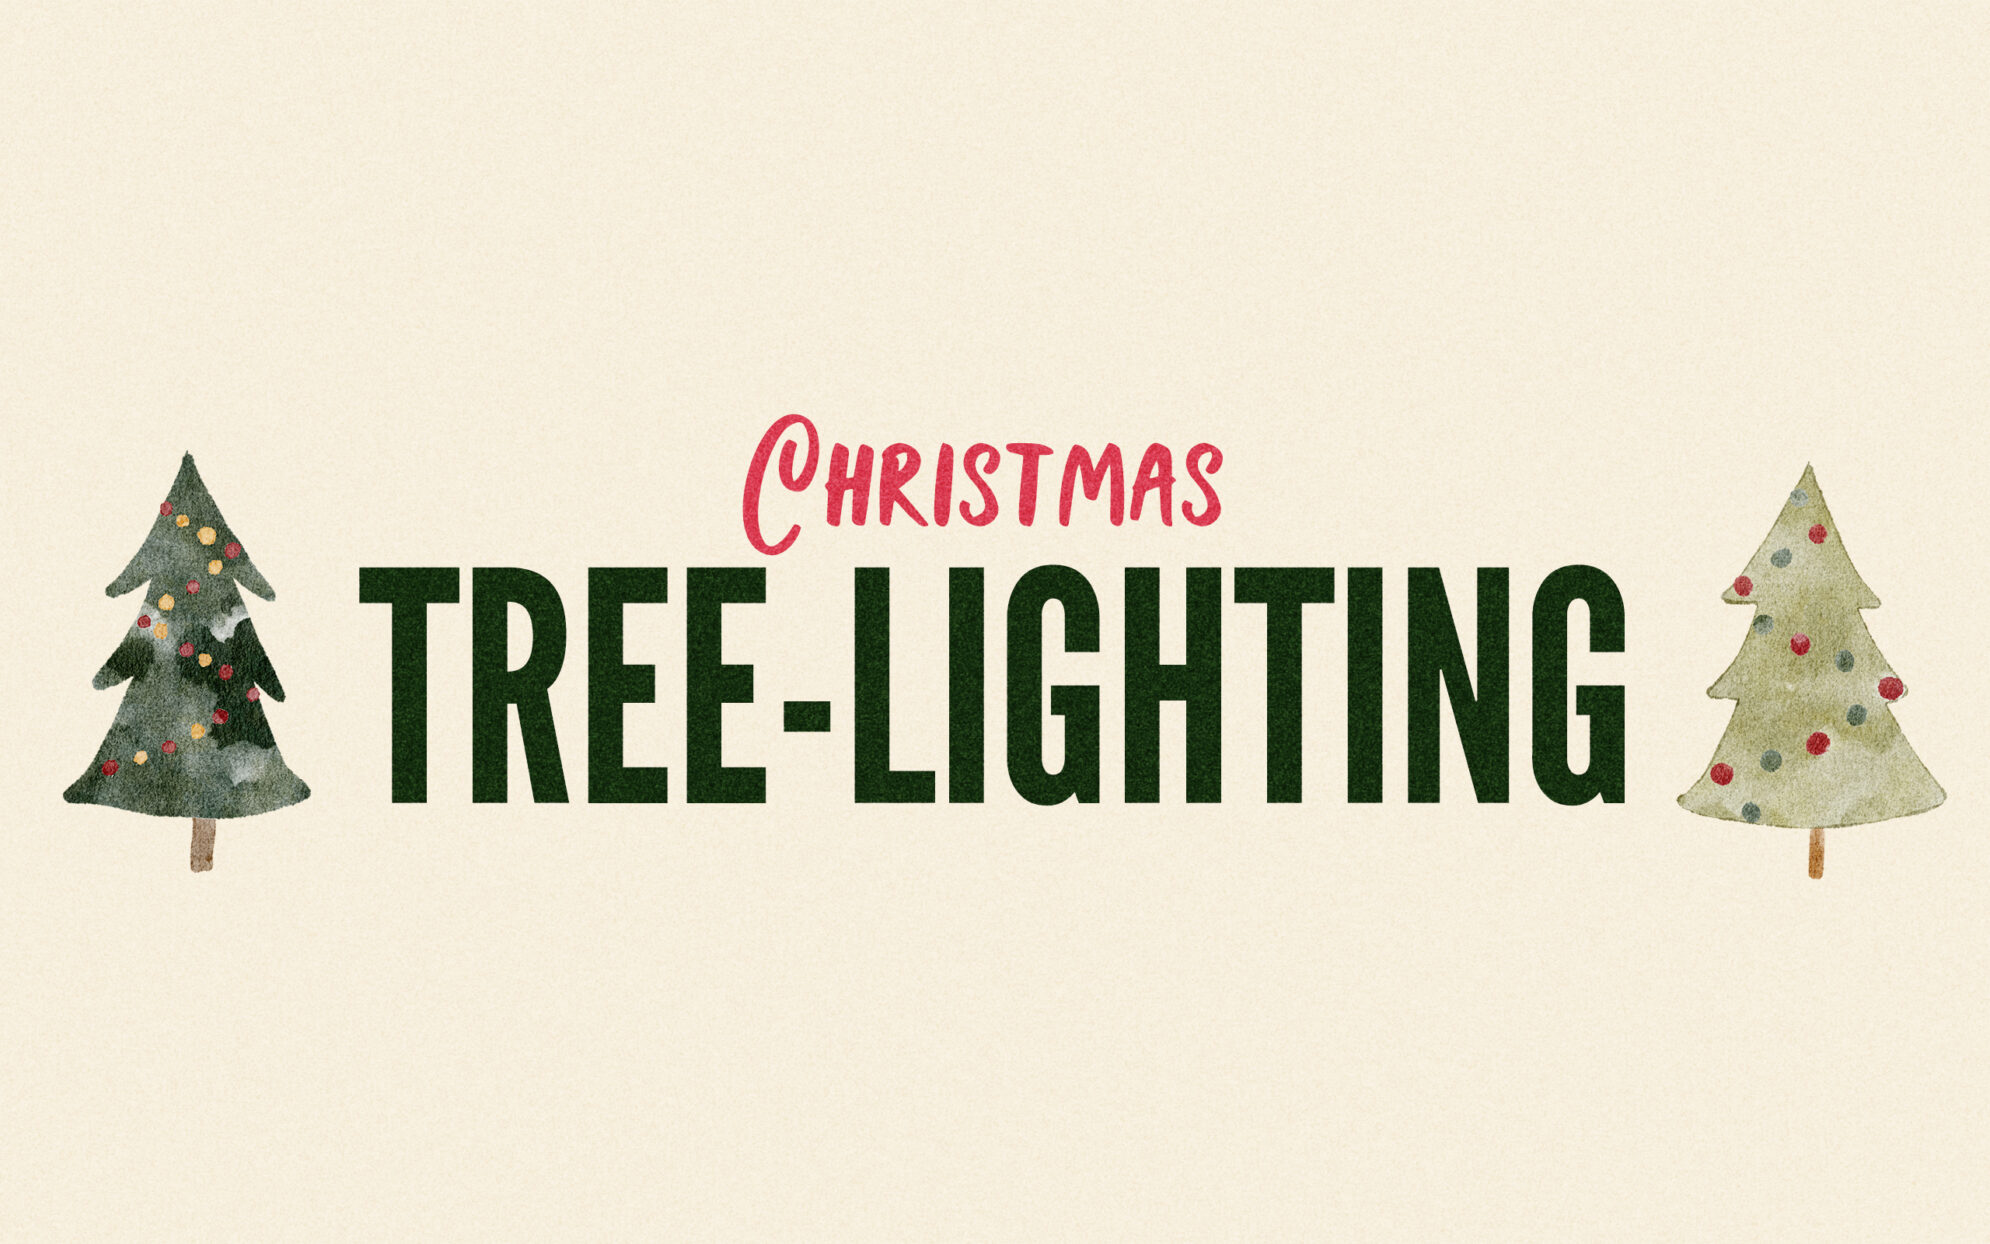 Christmas Tree Lighting Event